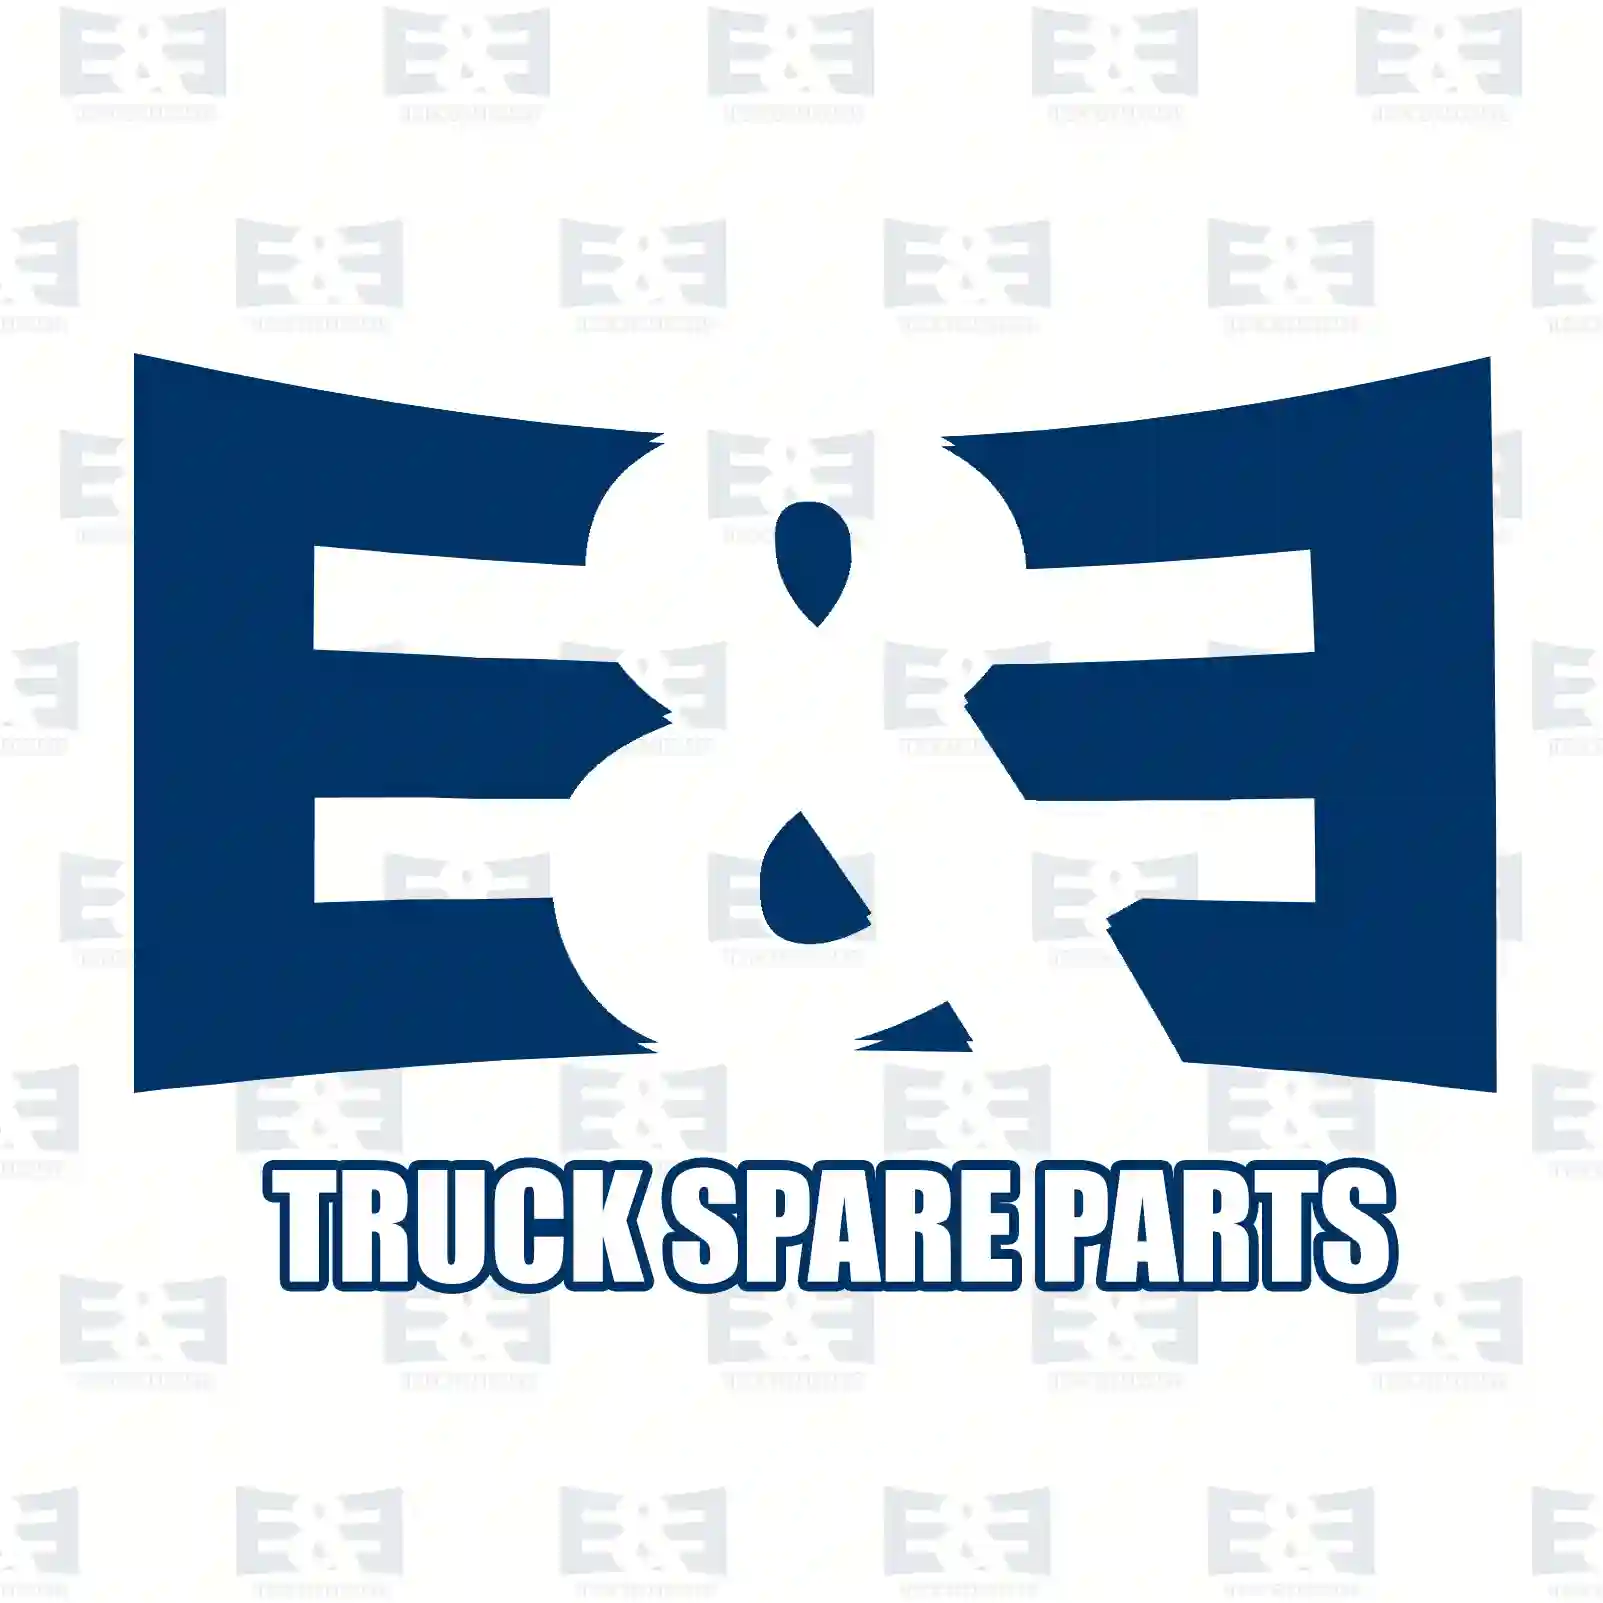  Wear ring || E&E Truck Spare Parts | Truck Spare Parts, Auotomotive Spare Parts